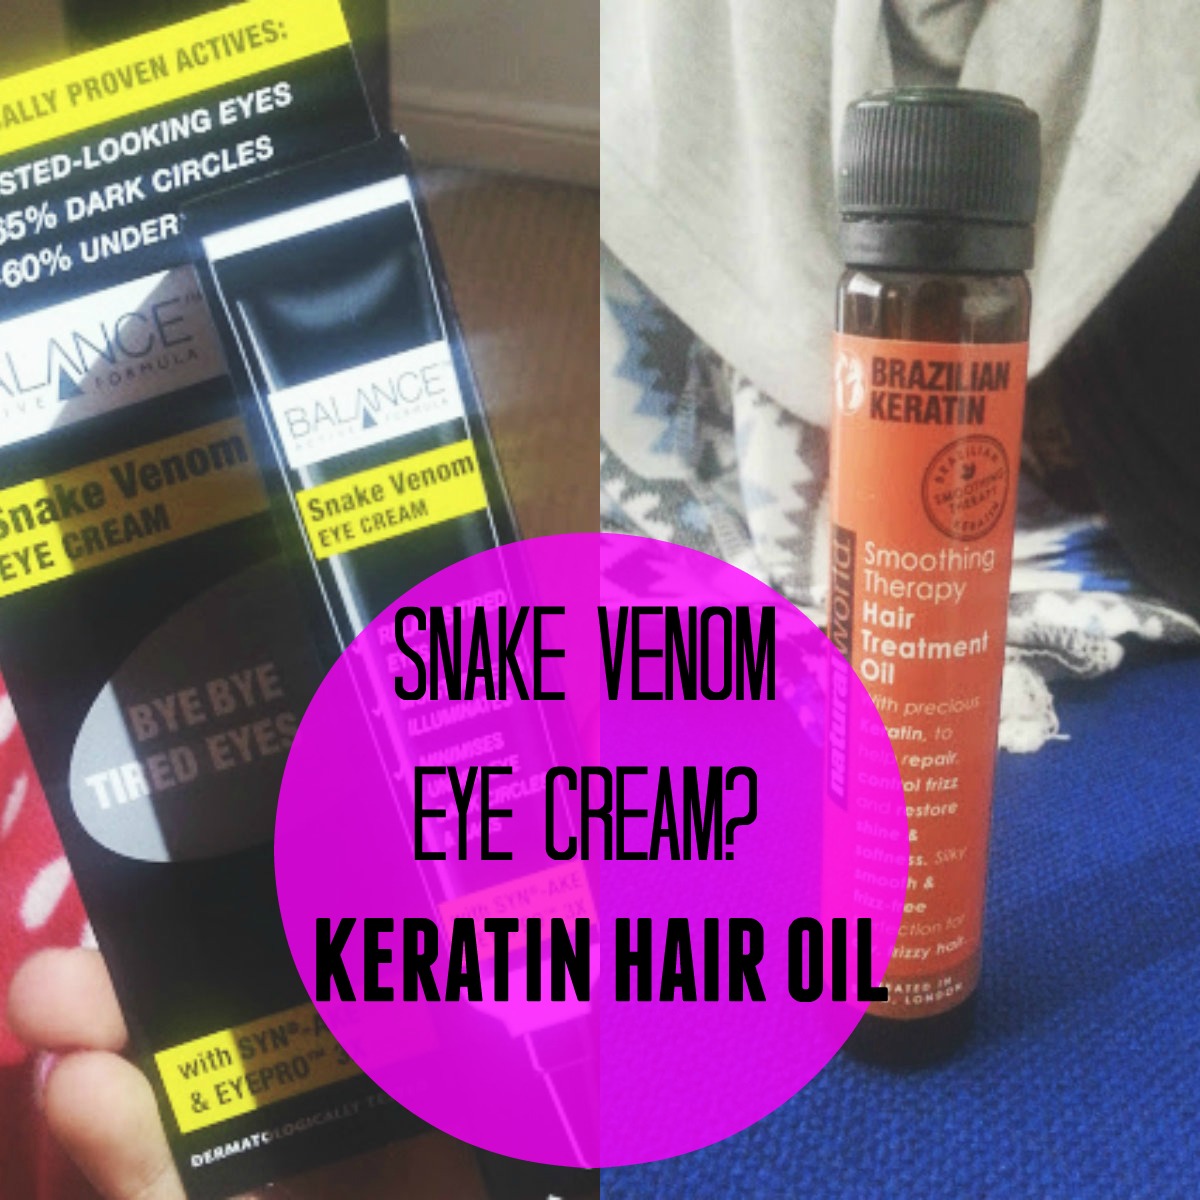 Snake Venom Eye Cream & Brazilian Keratin Hair Oil